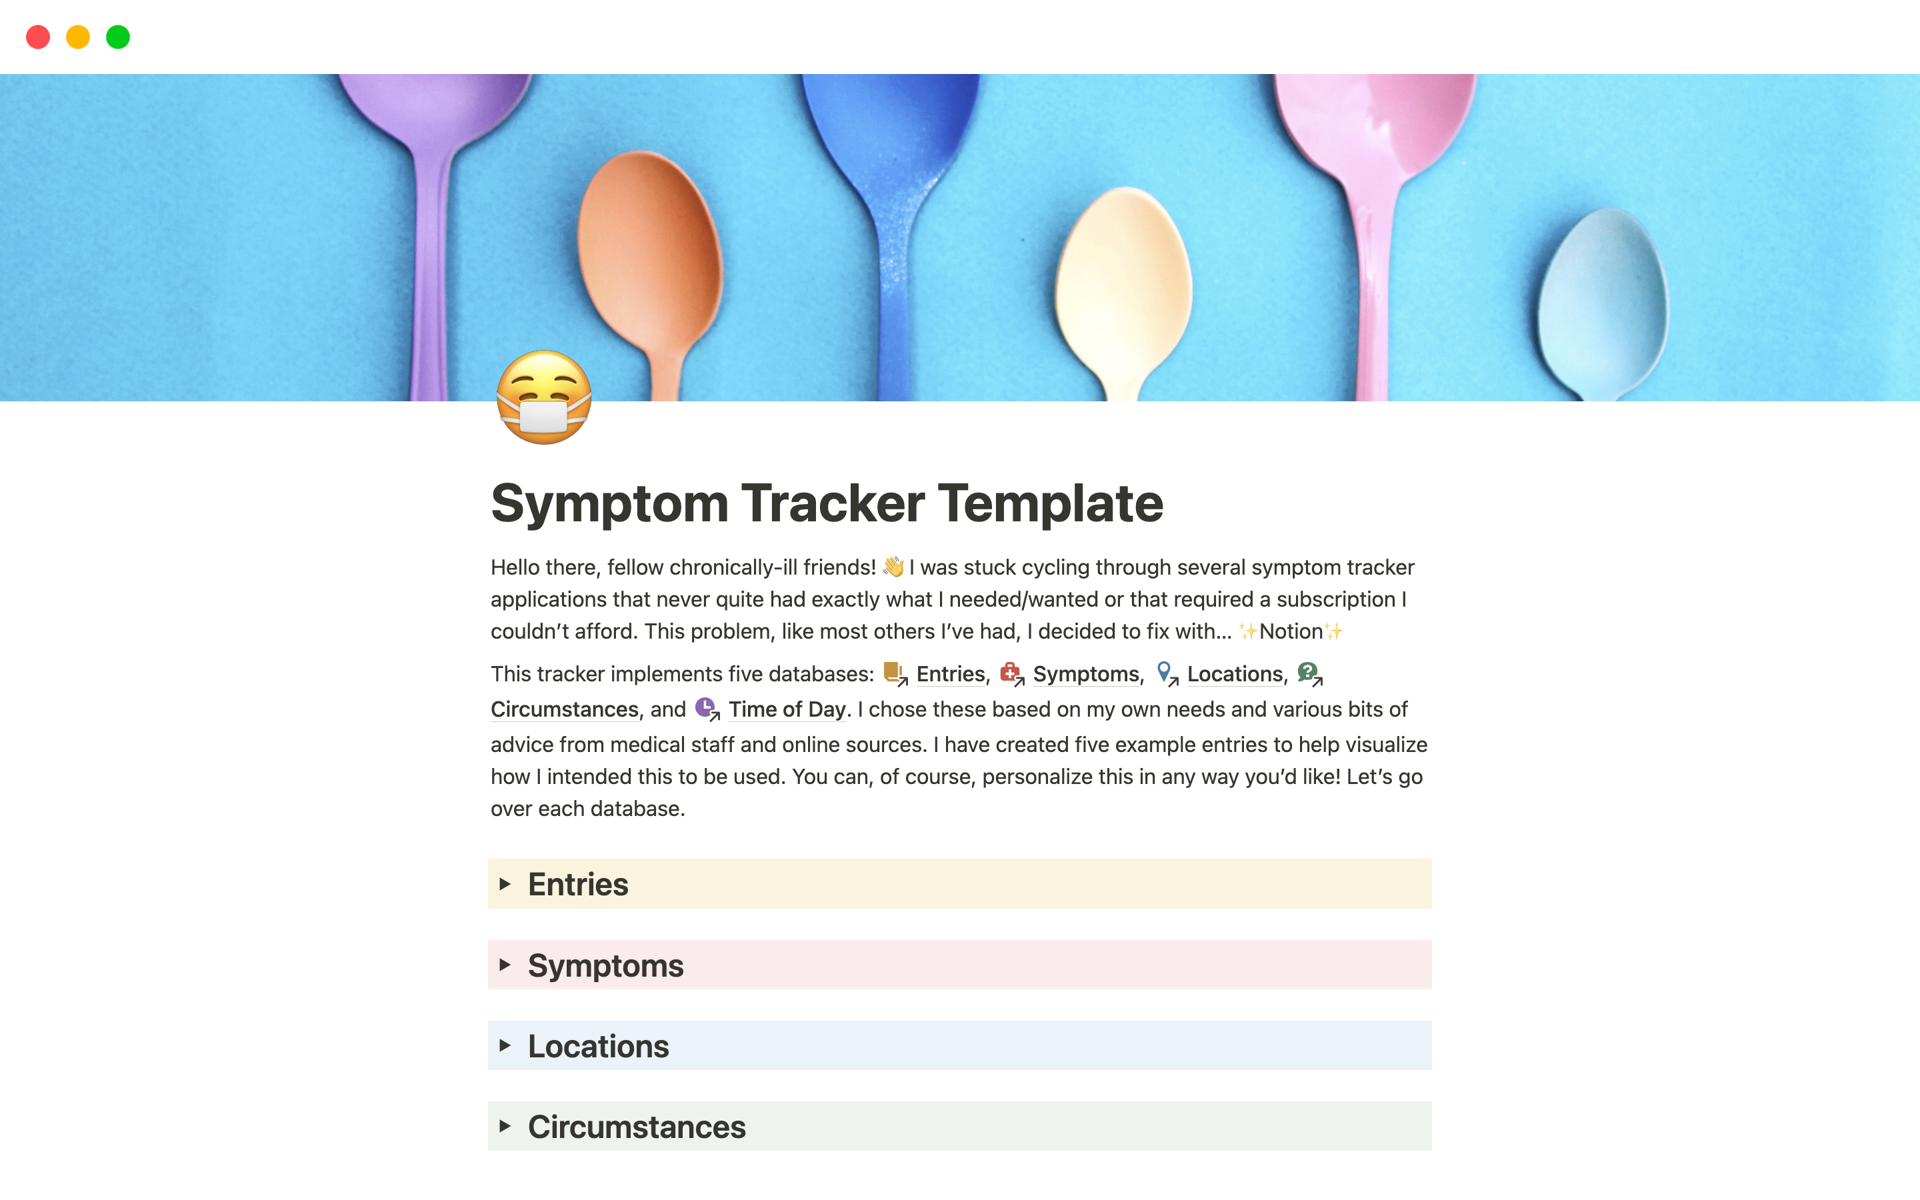 A template preview for Symptom Tracker